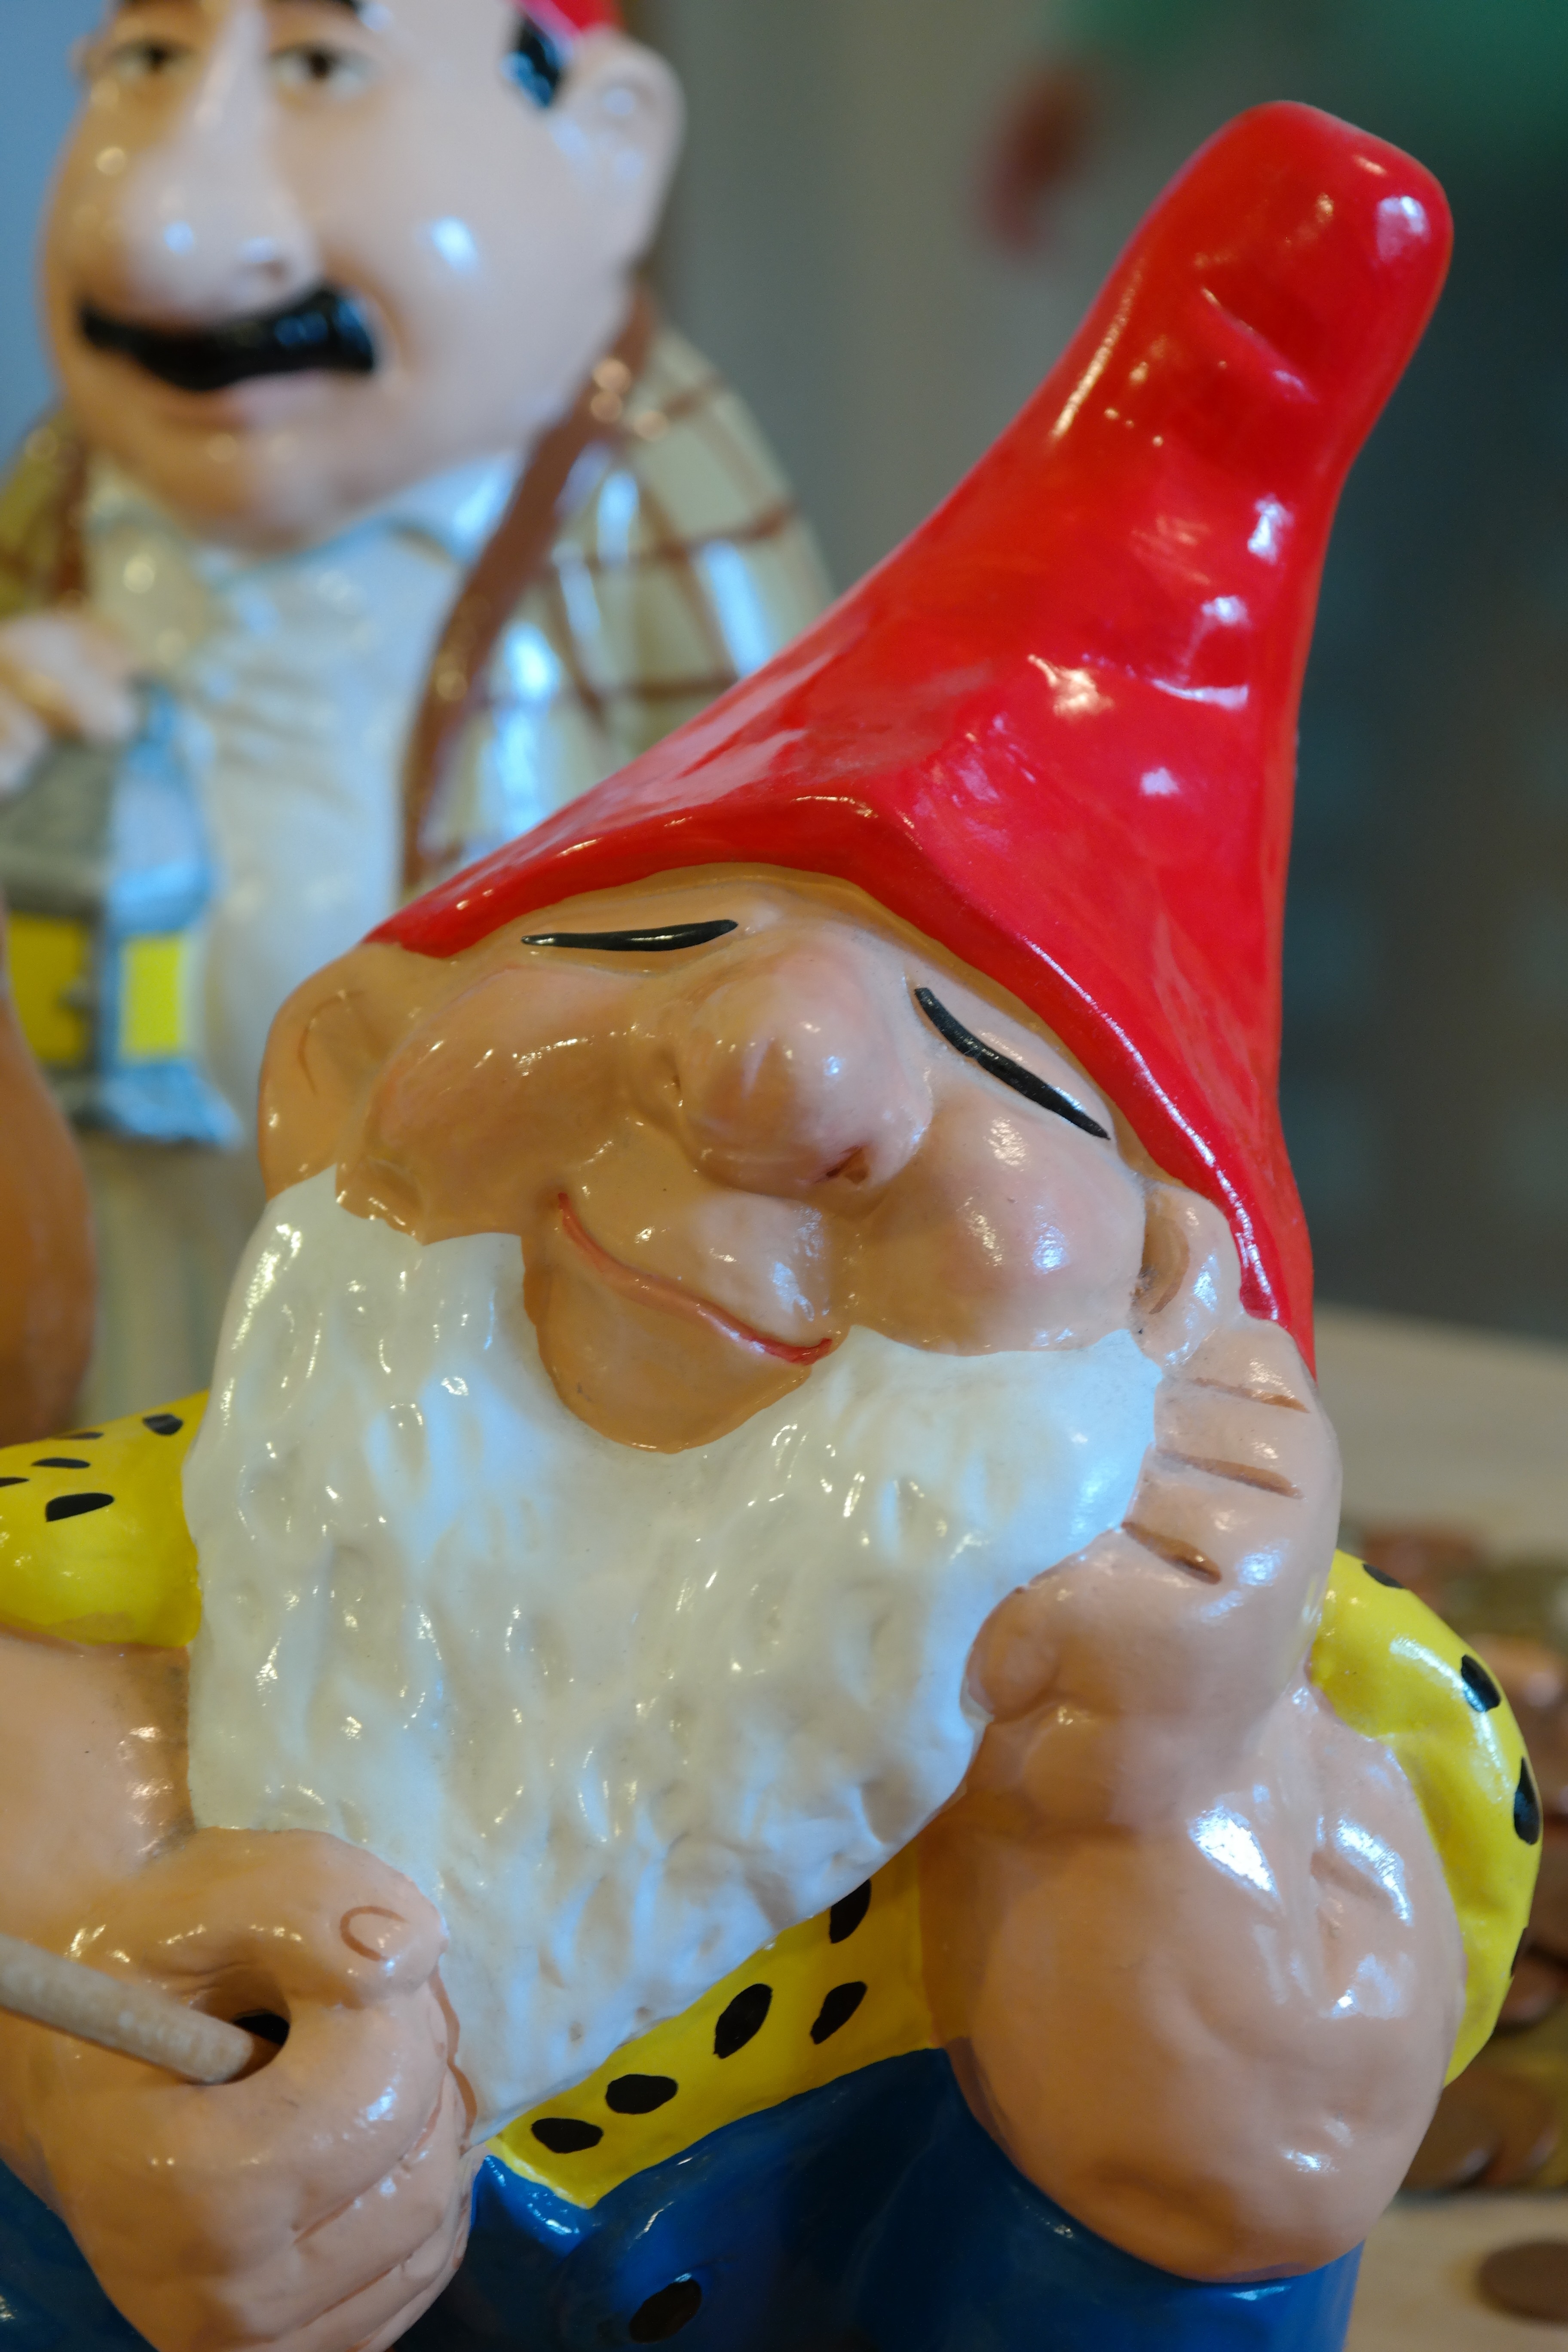 garden gnome wearing yellow shirt figurine